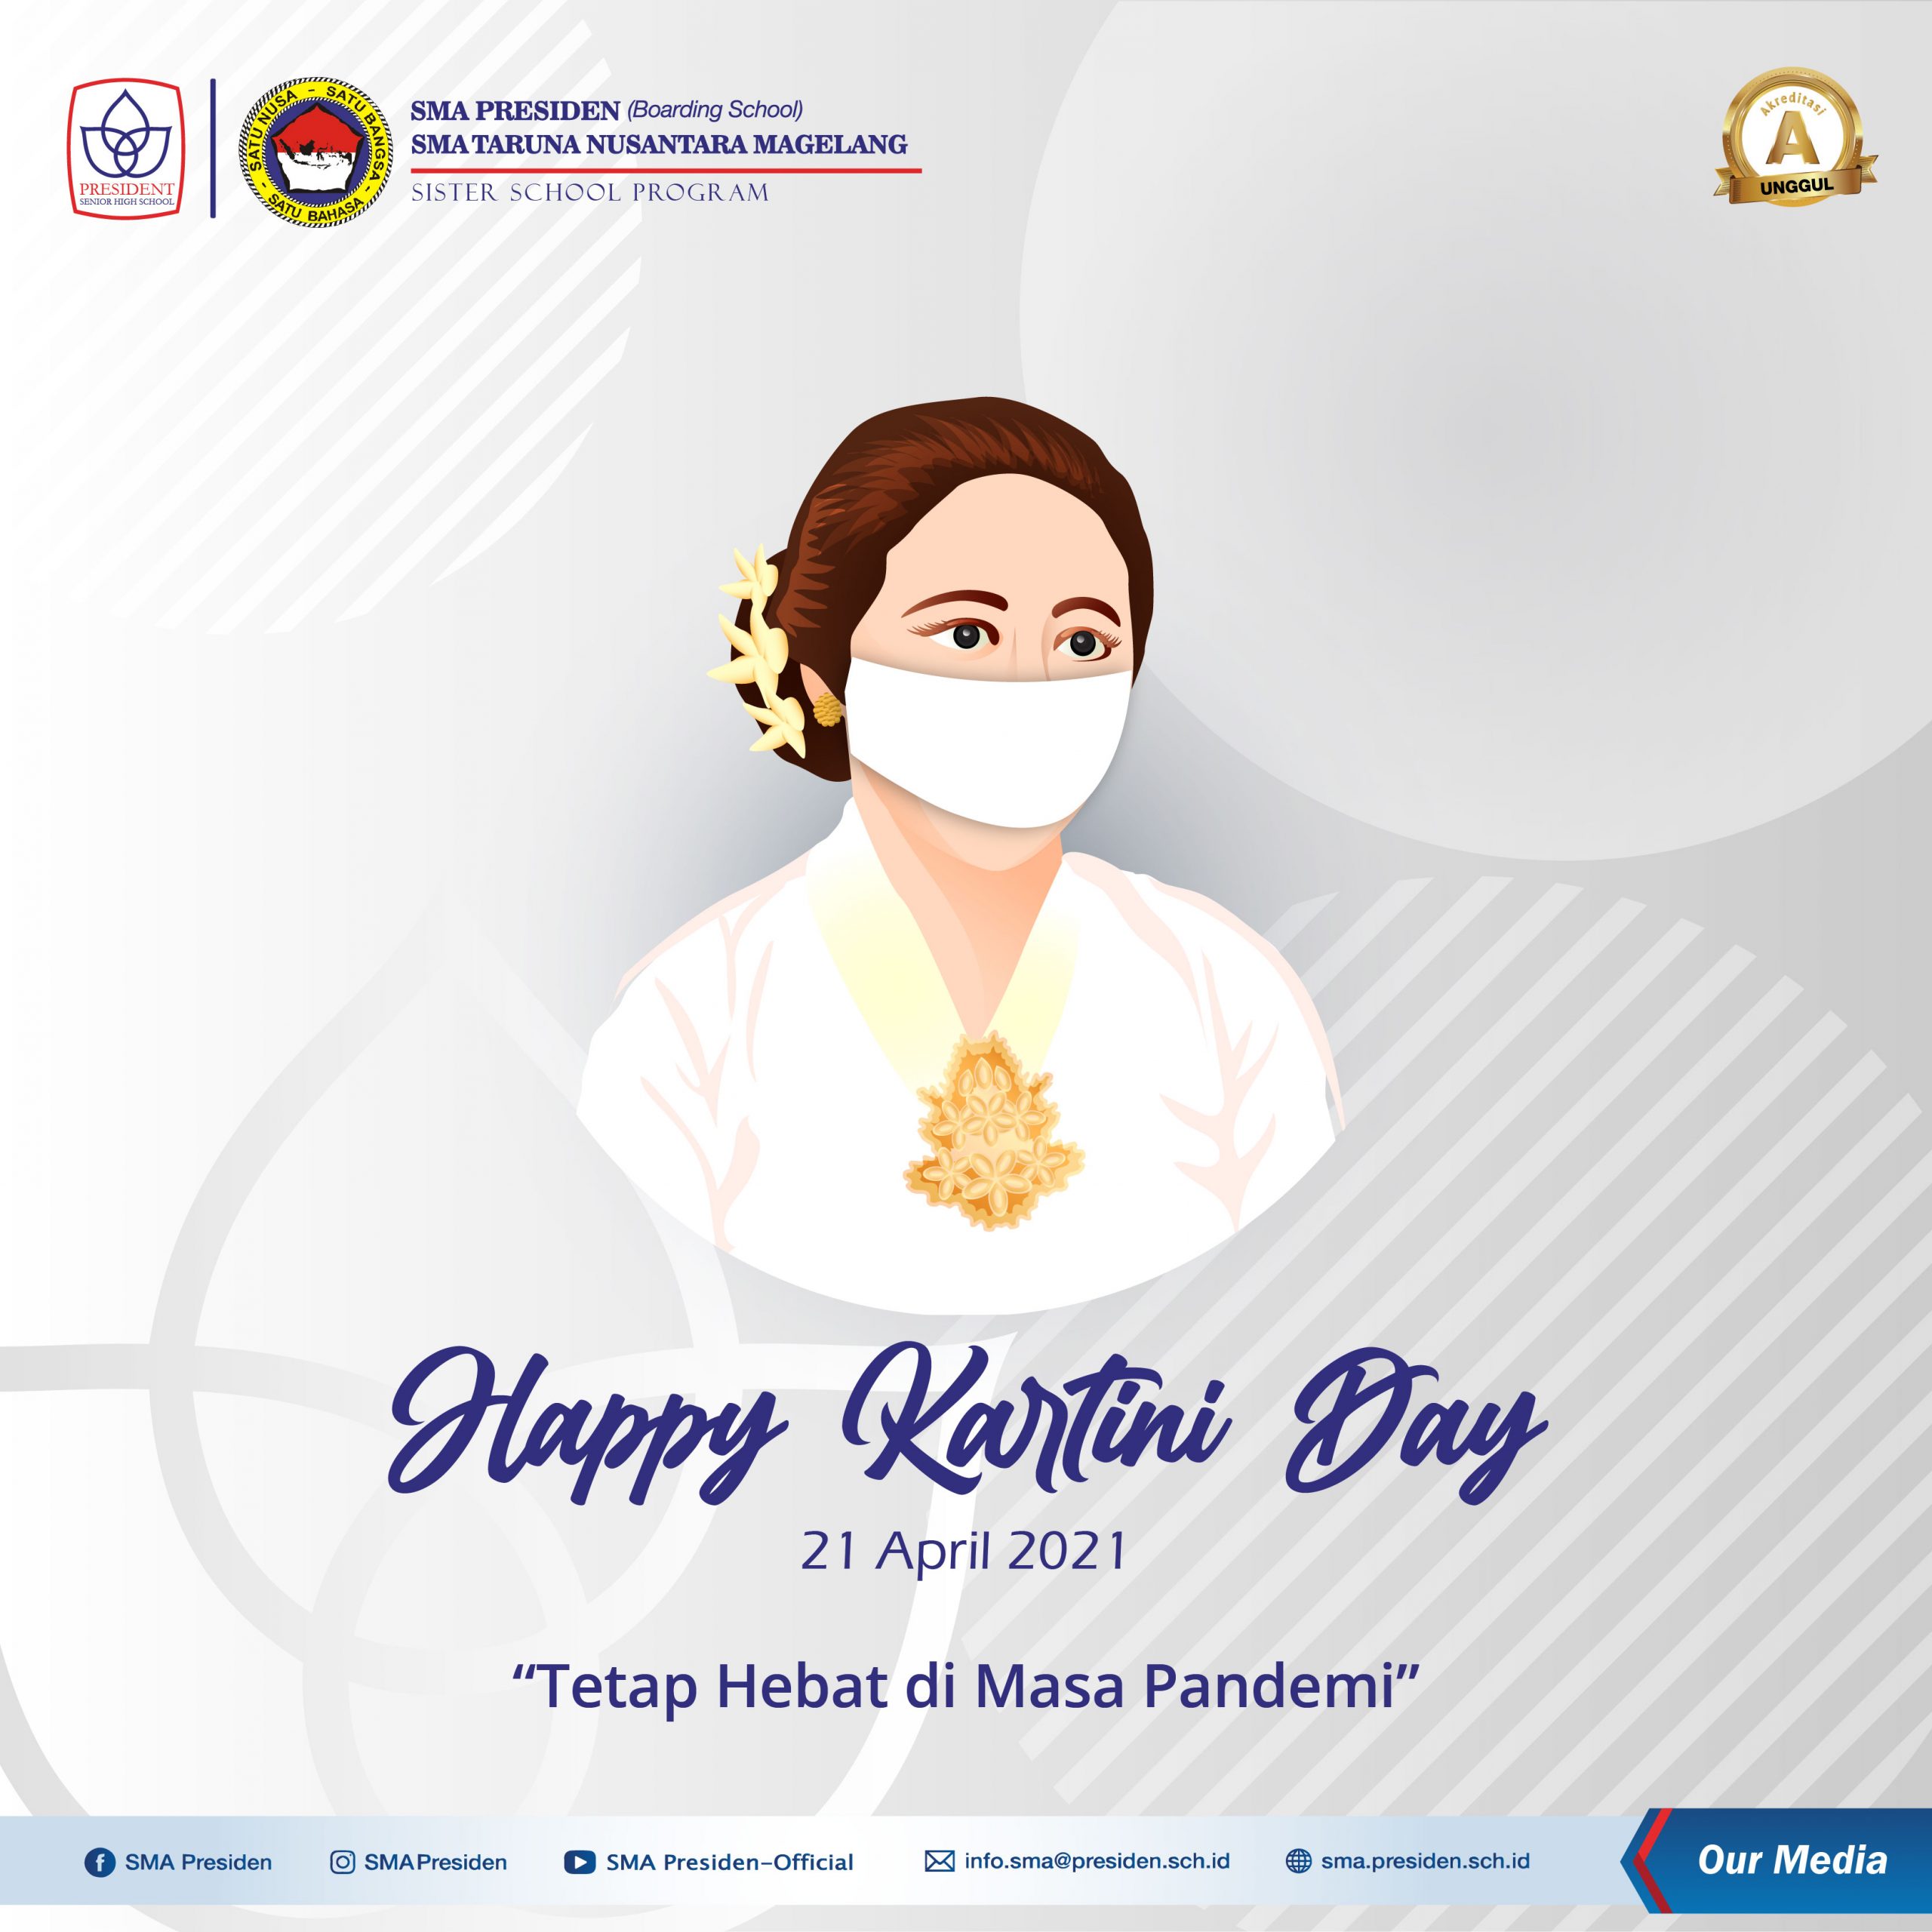 Happy Kartini Day